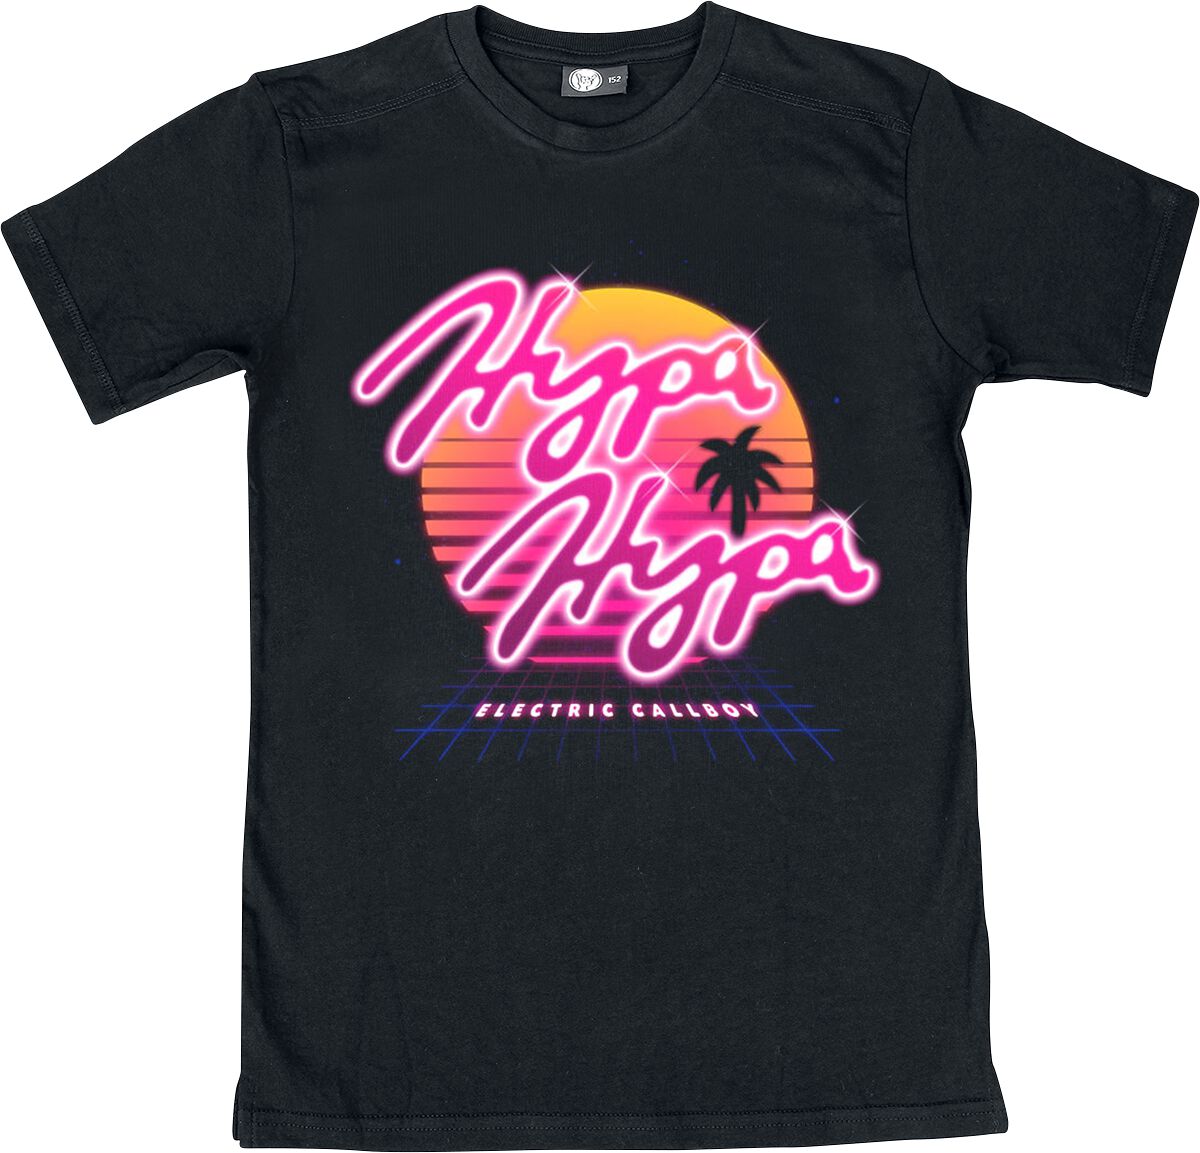 Electric Callboy Metal Kids - Hypa Hypa T-Shirt schwarz in 164